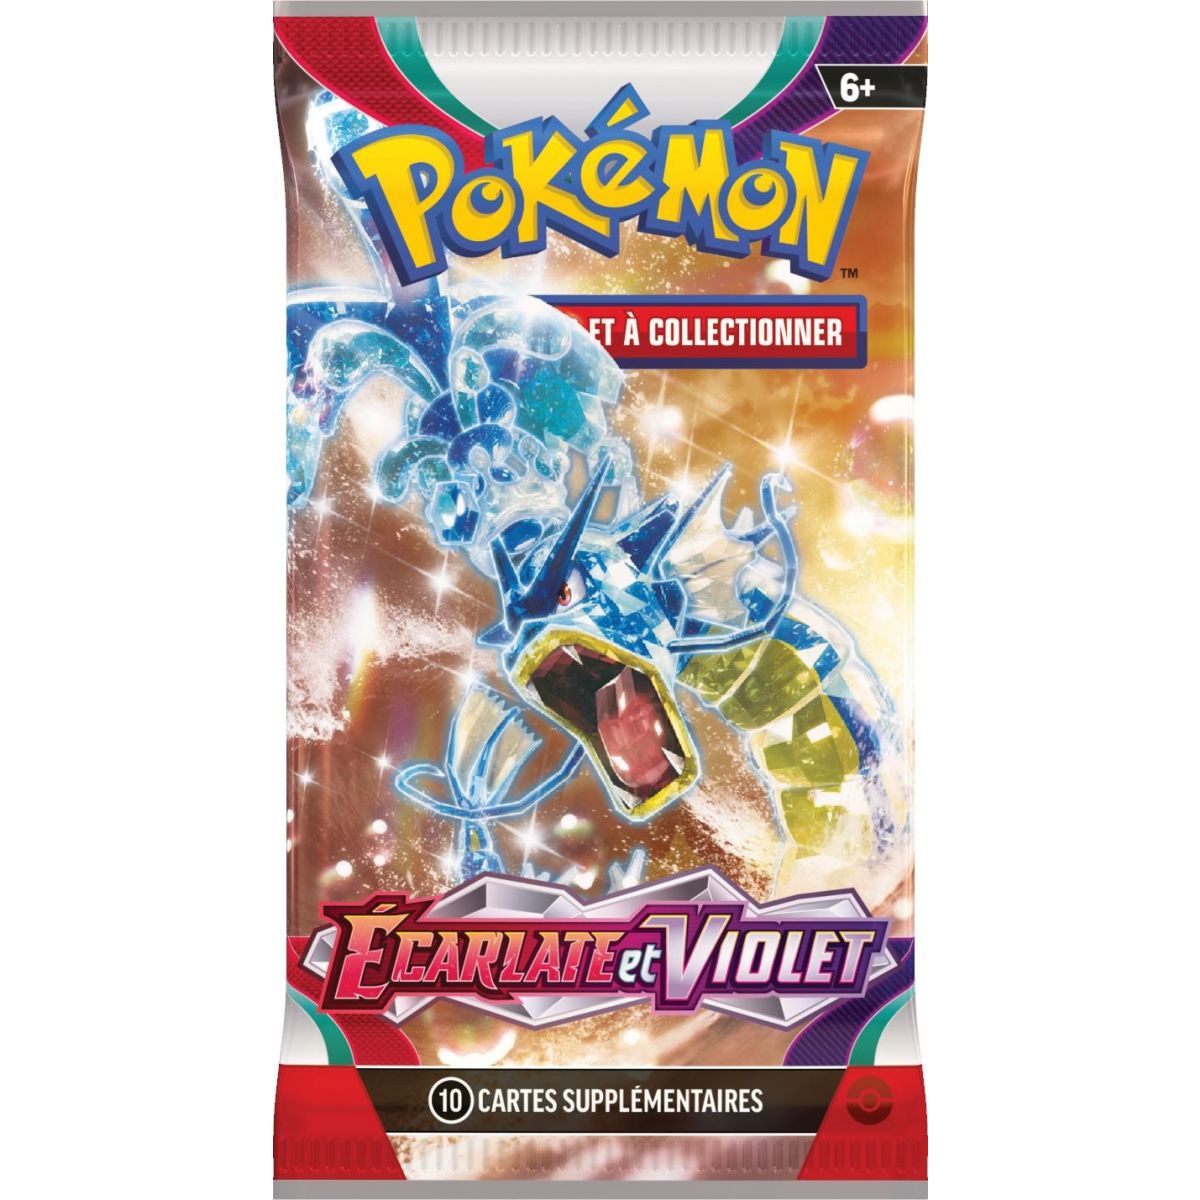 Pokémon - Display - Boite de 36 Boosters - Ecarlate et Violet [SV1][EV01] - FR